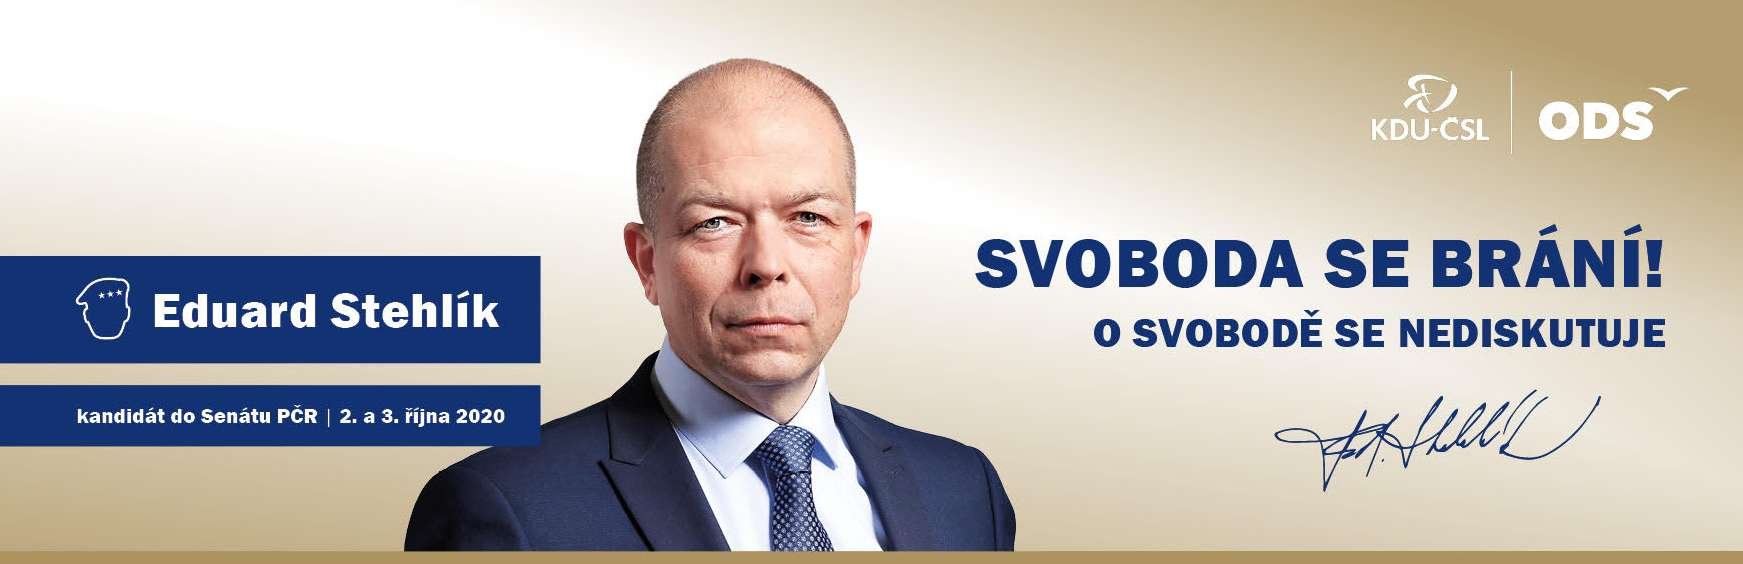 Eduard Stehlík kandidát do Senátu PČR